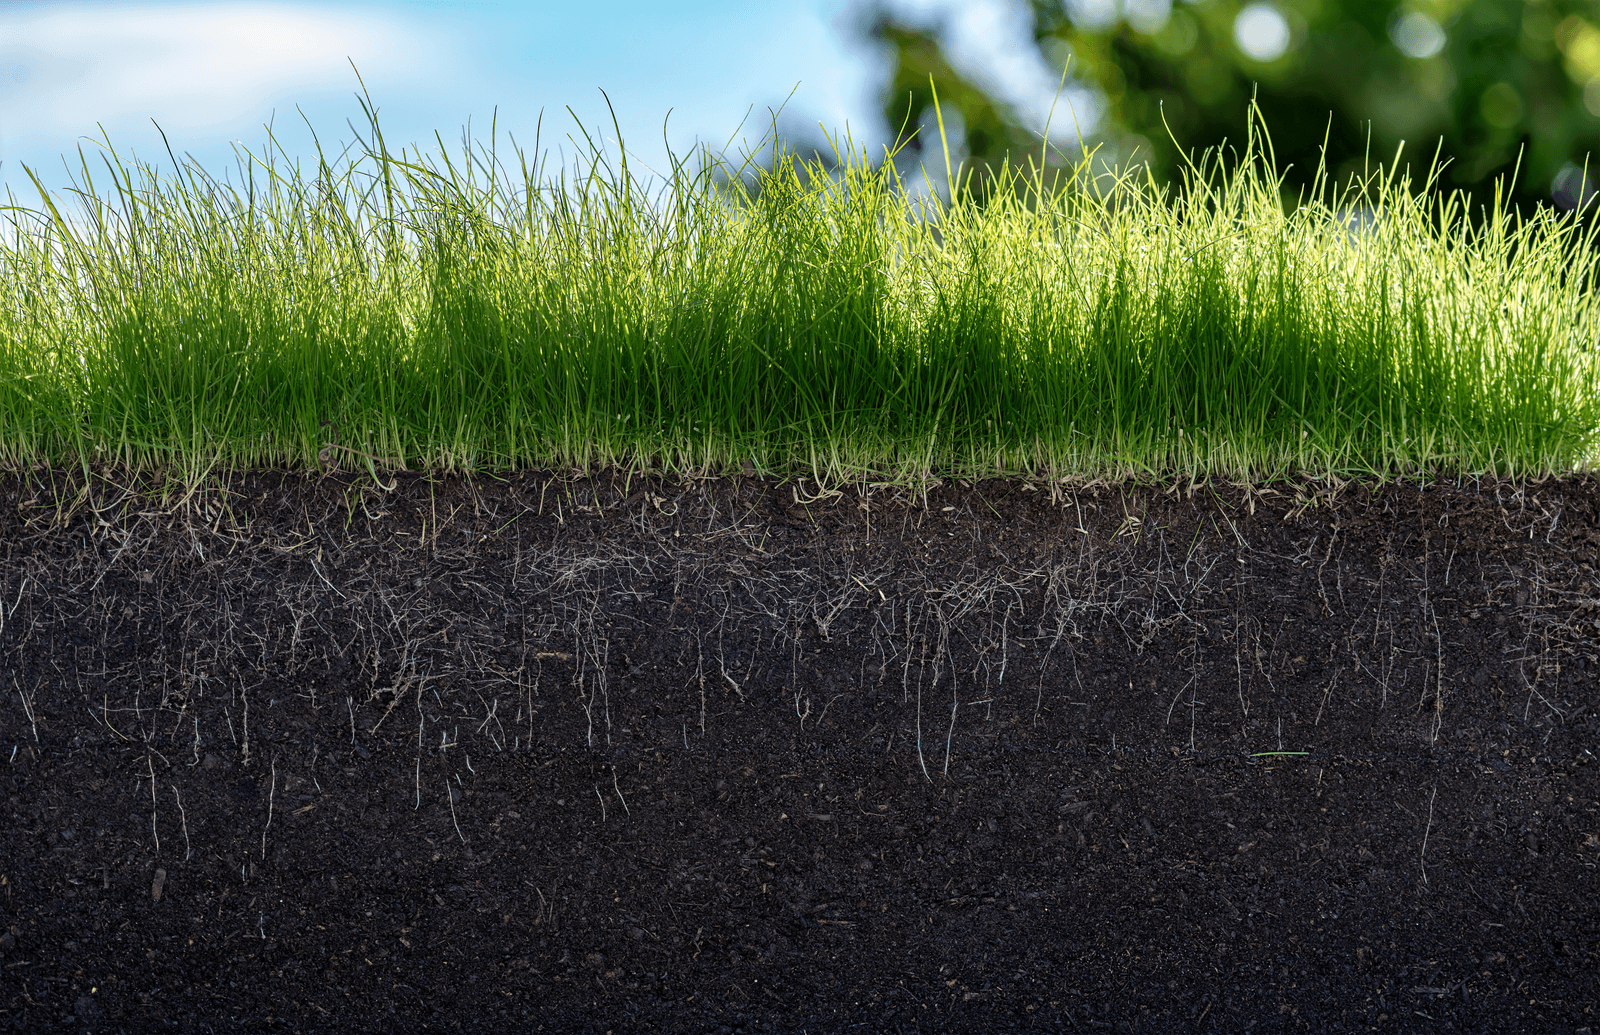 Healthy soil under lawn